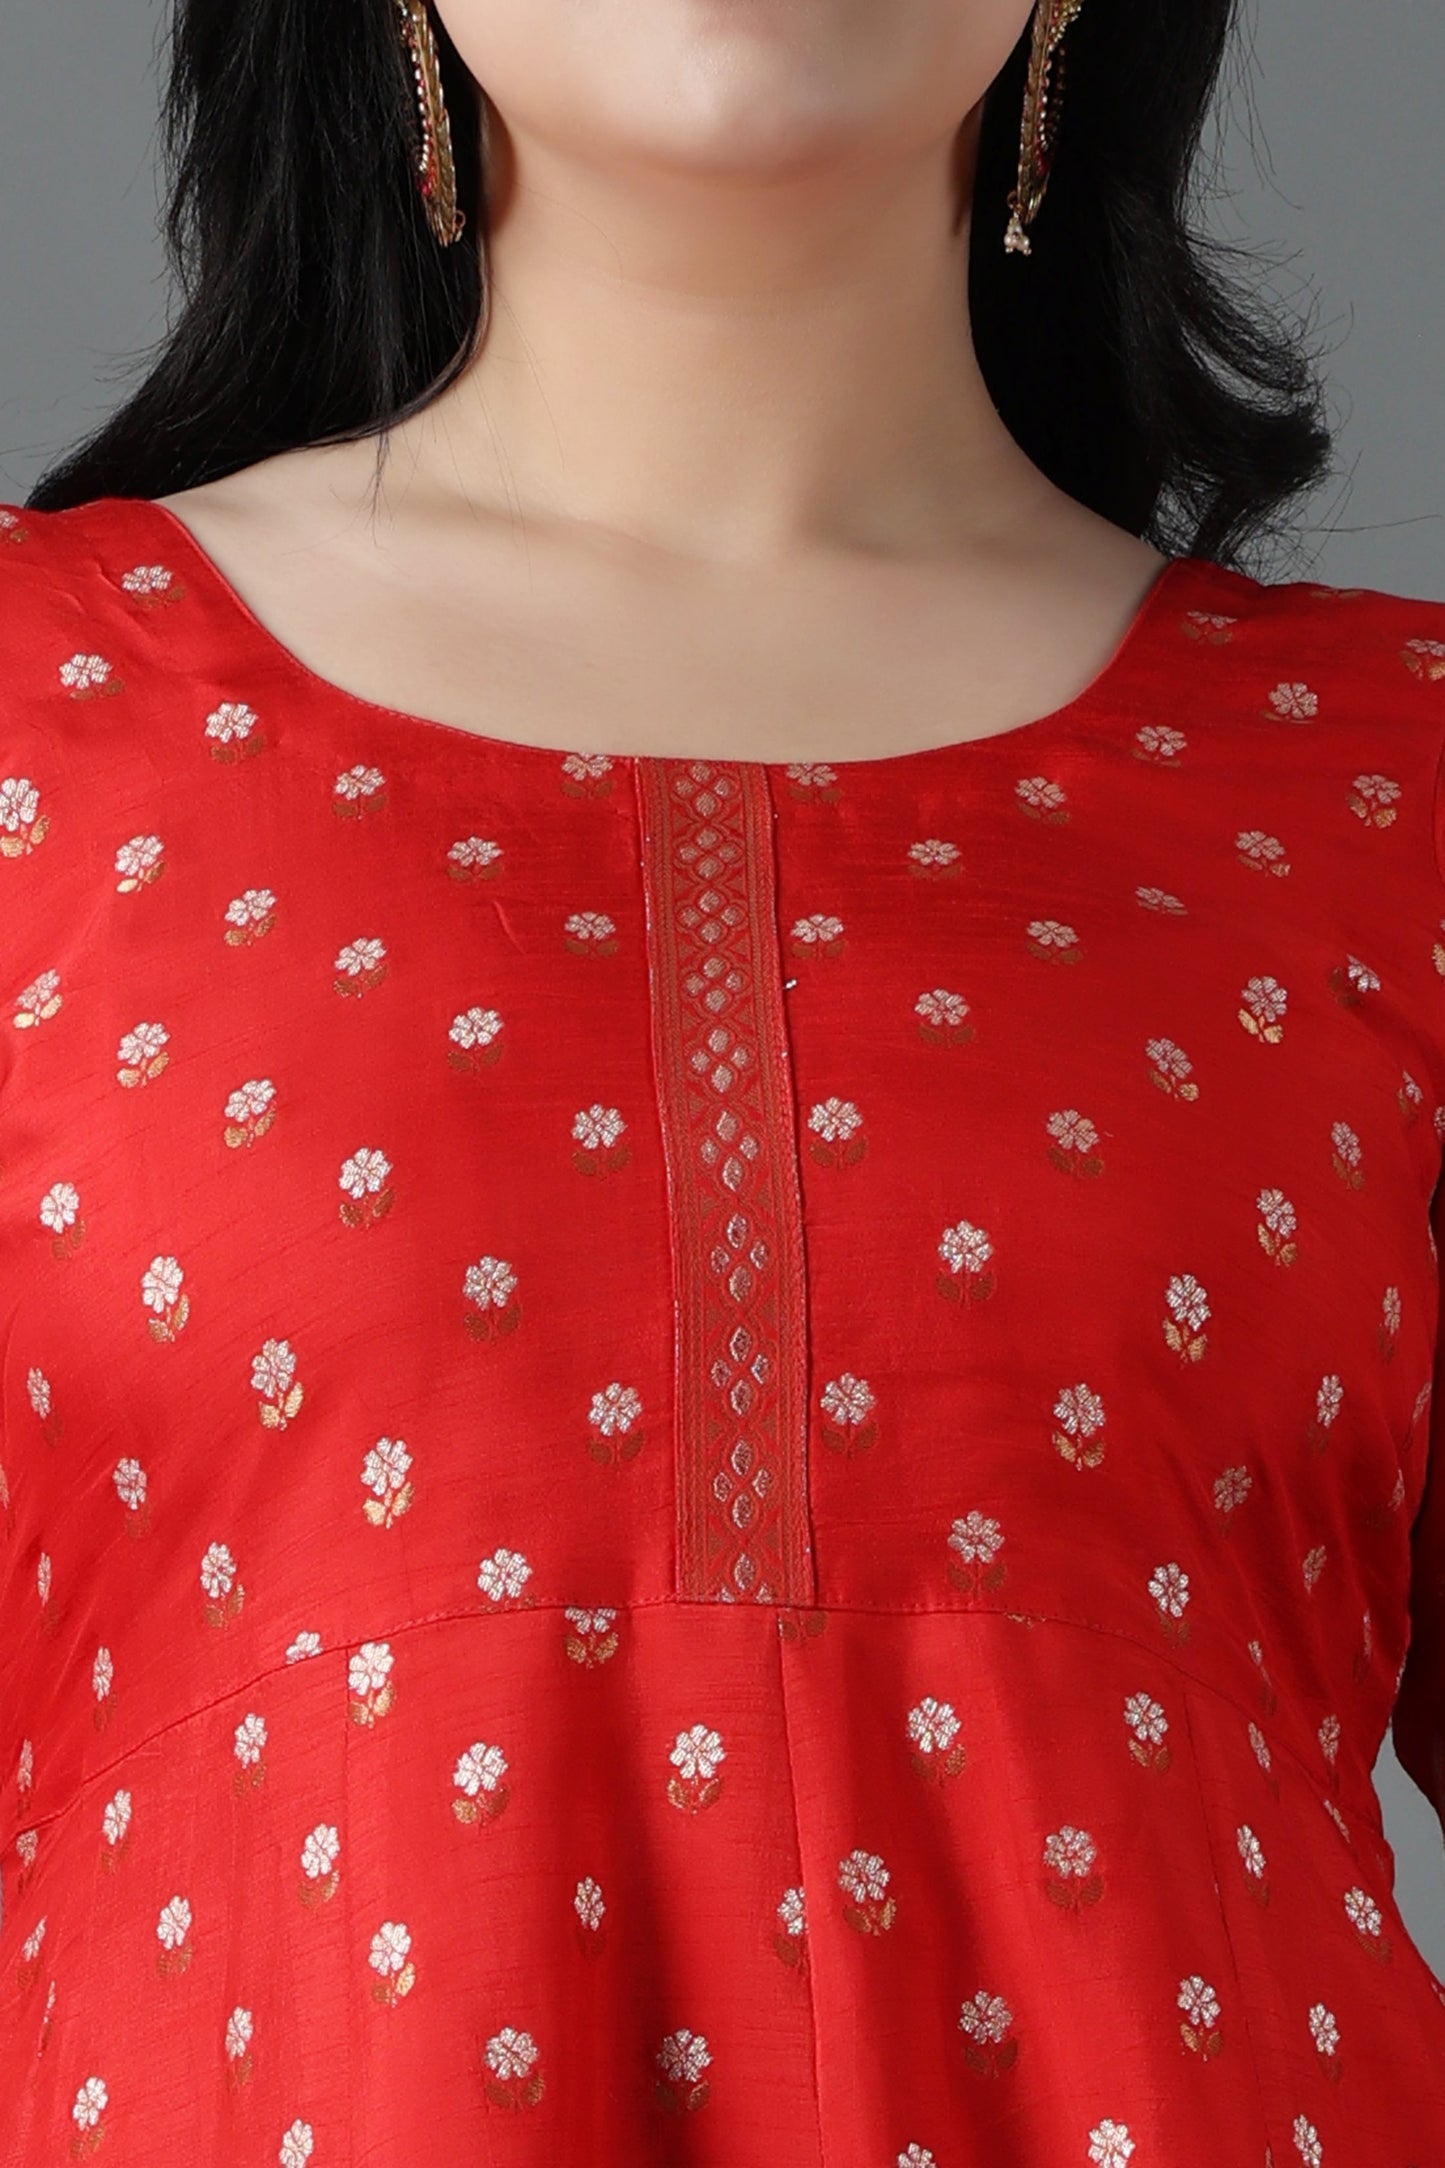 Woman Plus Size Red Cherry Silk Anarkali Suit